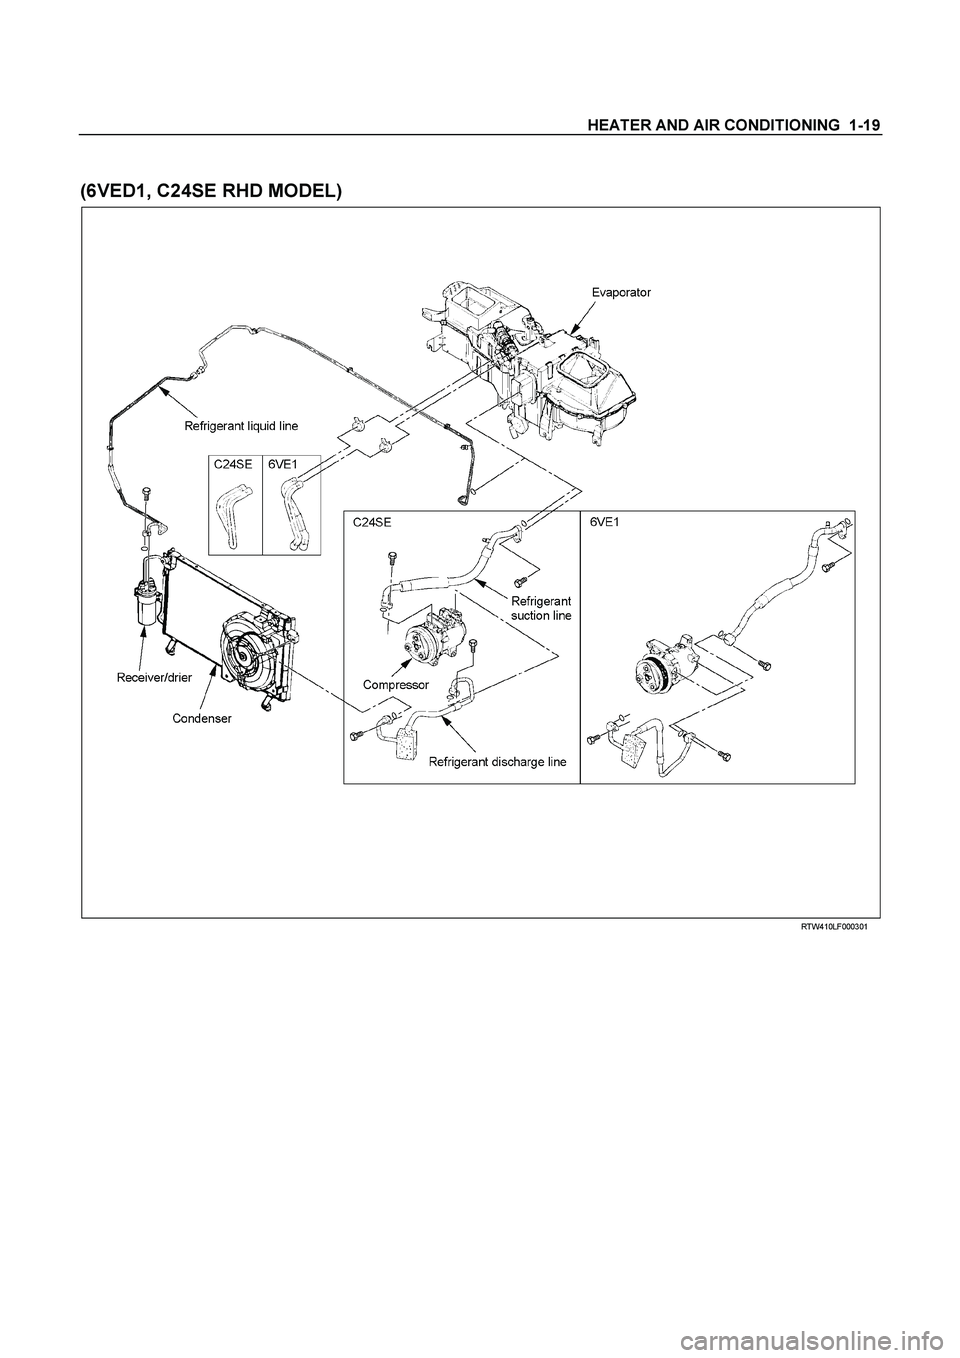 ISUZU TF SERIES 2004  Workshop Manual HEATER AND AIR CONDITIONING  1-19 
 
(6VED1, C24SE RHD MODEL) 
  
 
 
 
 
 RTW410LF000301 
  